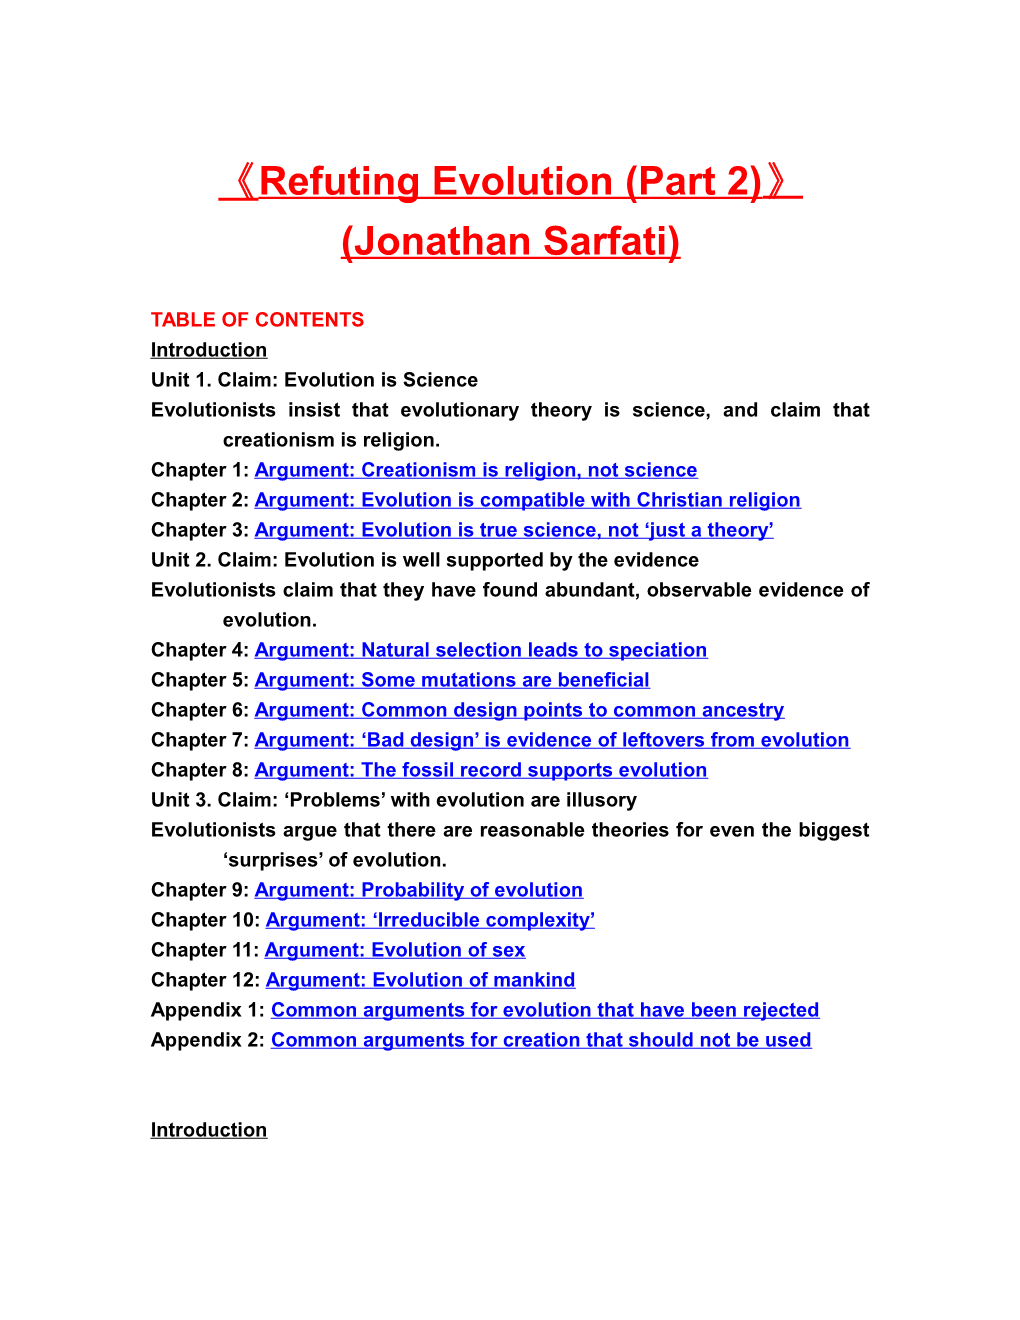 Refuting Evolution (Part 2) (Jonathan Sarfati)